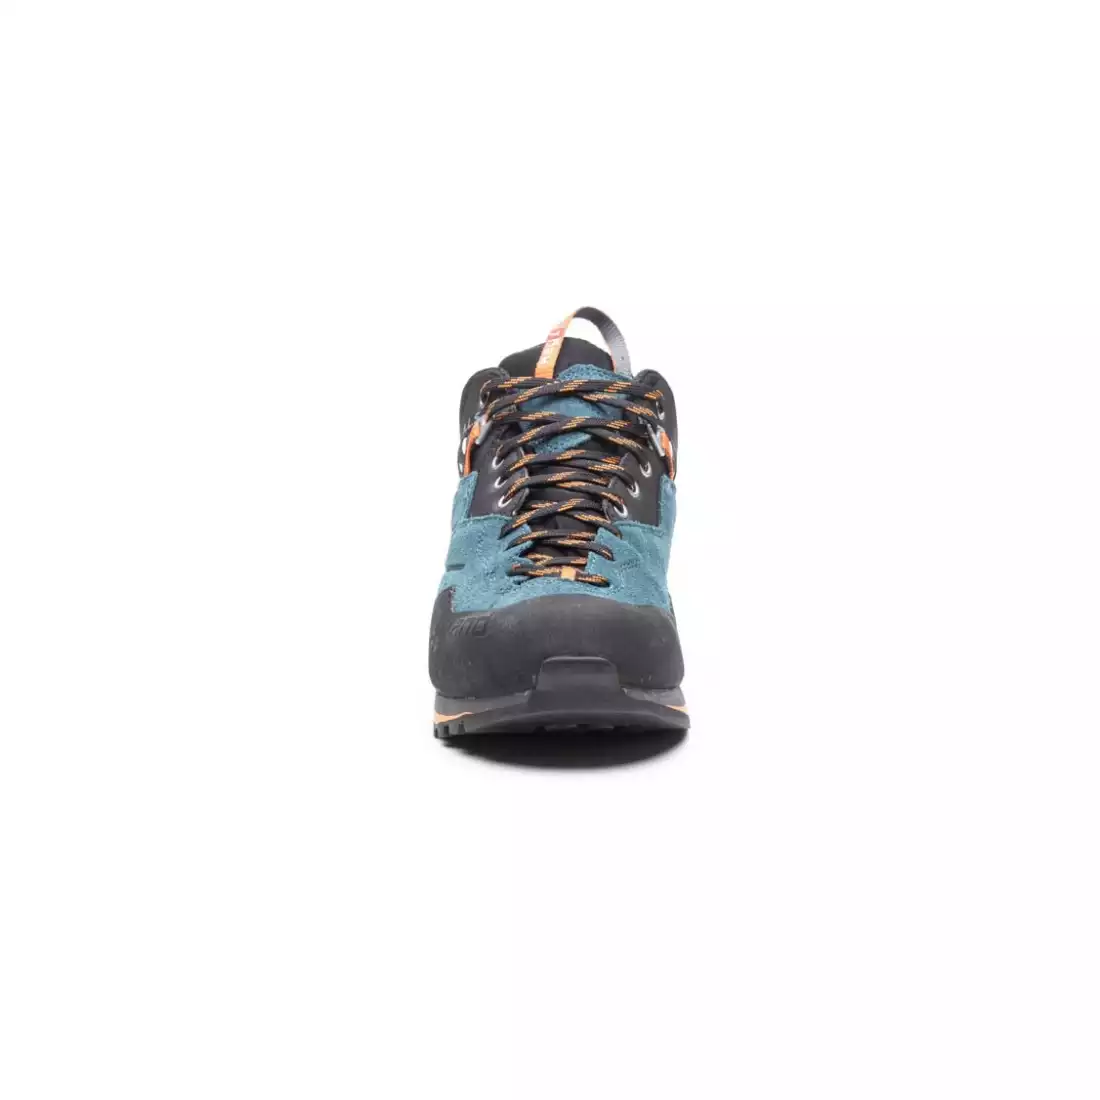 KAYLAND VITRIK GTX Men's approach hiking boots, GORE-TEX, VIBRAM, blue-orange